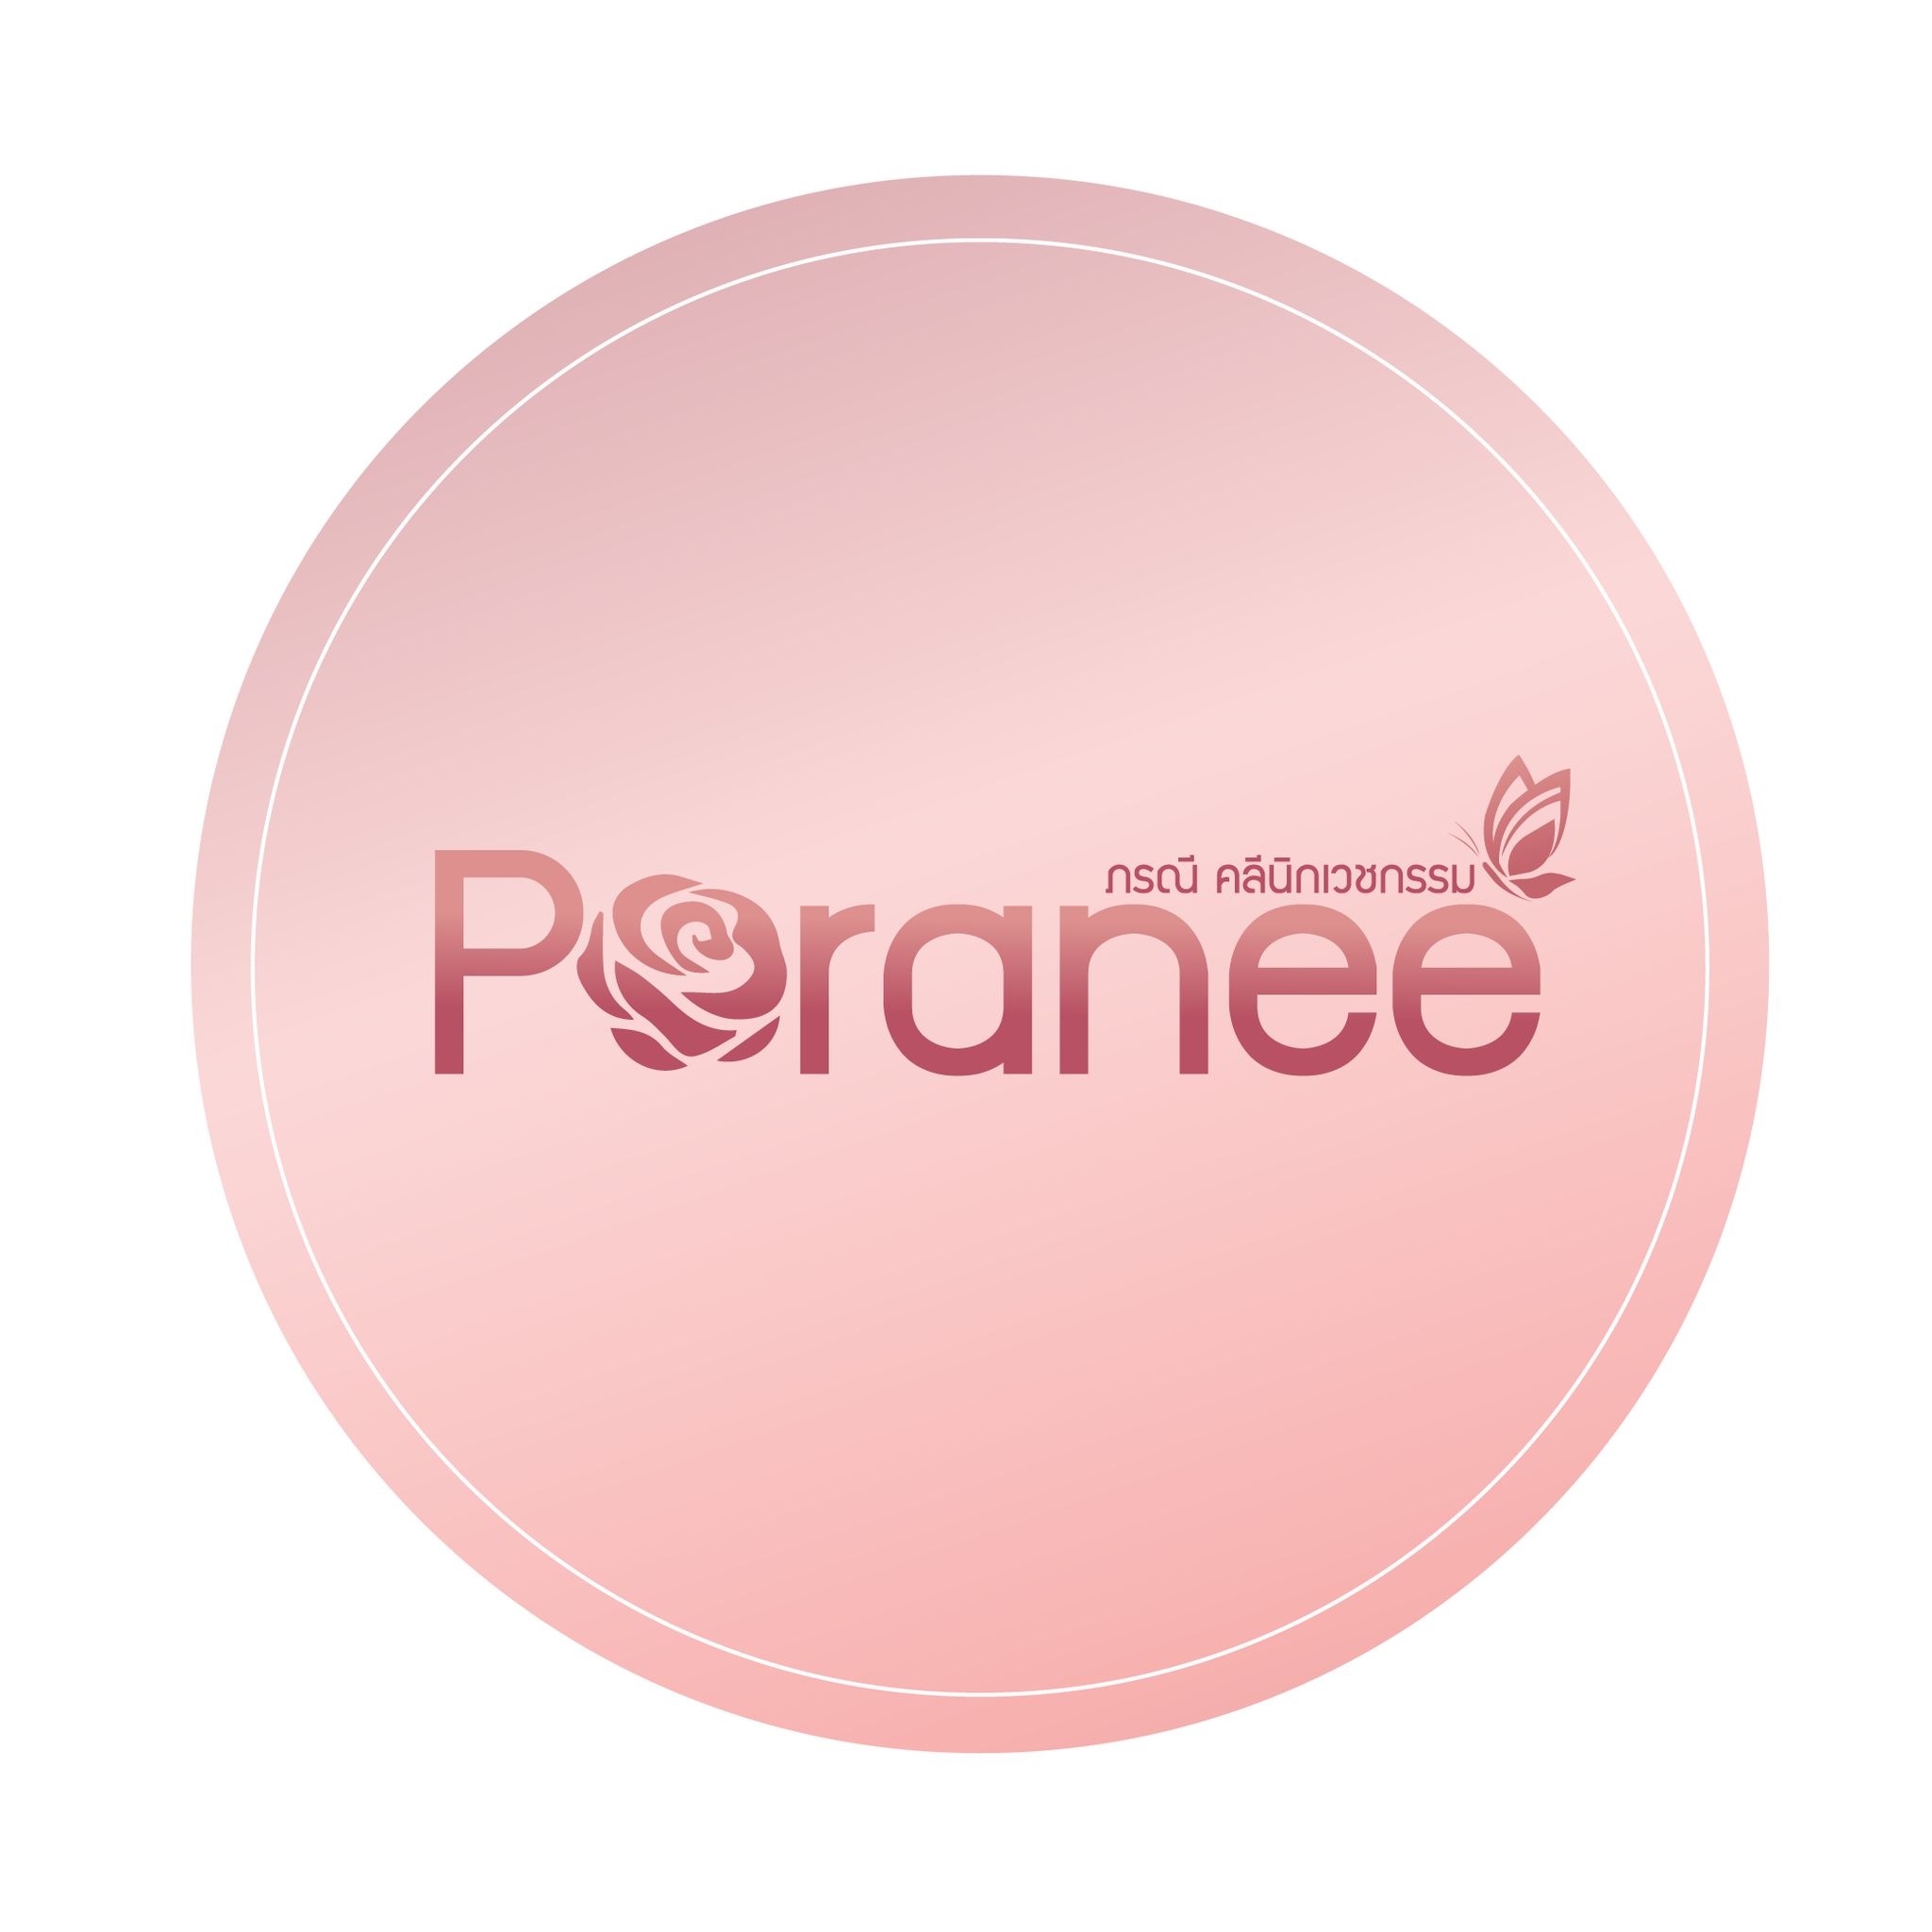 Poranee Clinic